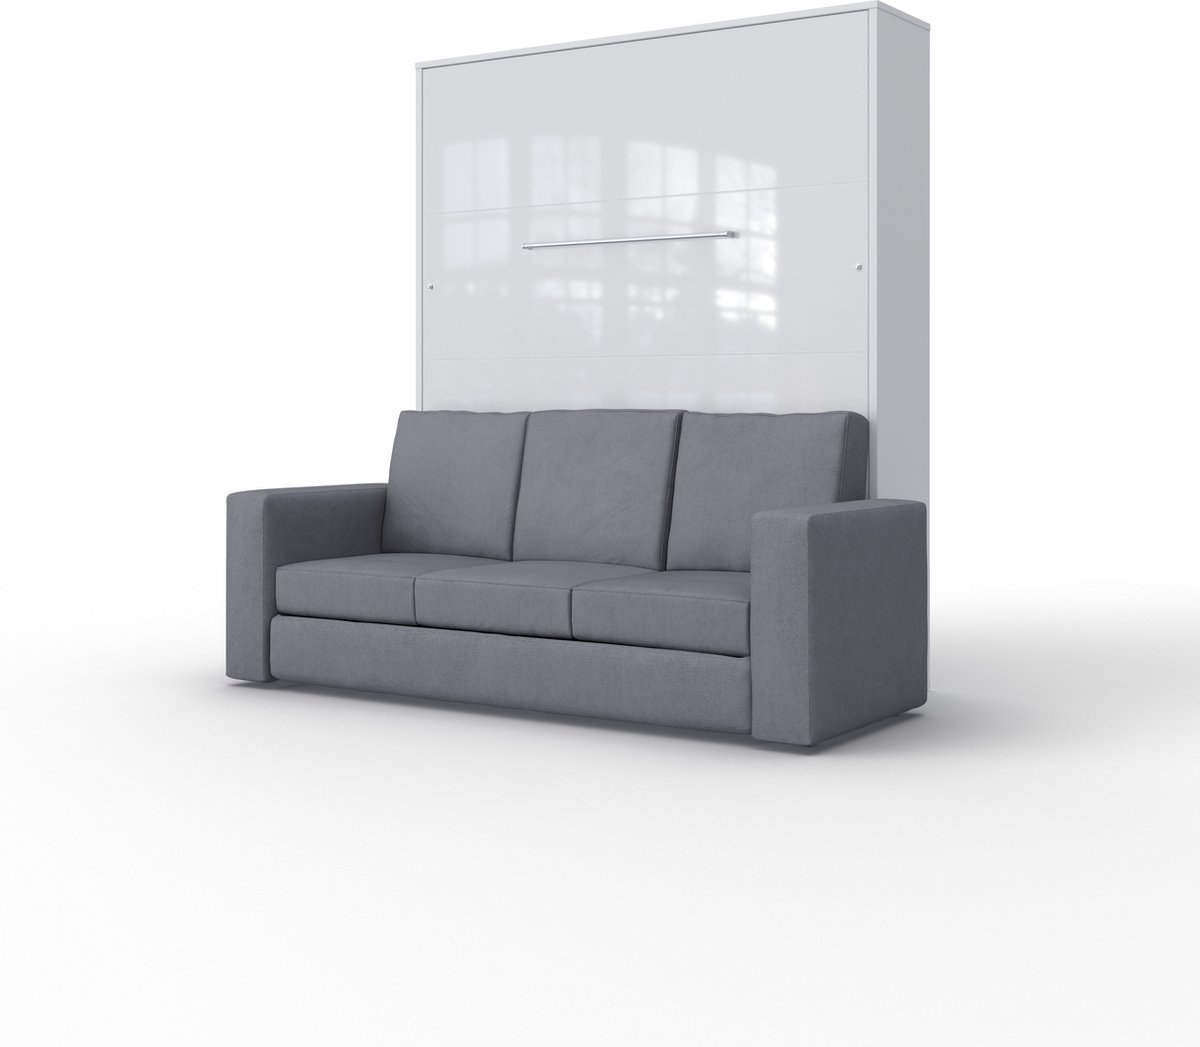 Maxima House - INVENTO SOFA Elegance - Verticaal Vouwbed Inclusief Hoekbank - Logeerbed - Opklapbed - Bedkast - Inclusief LED - Mat Wit + Antraciet Sofa - 200x160 cm